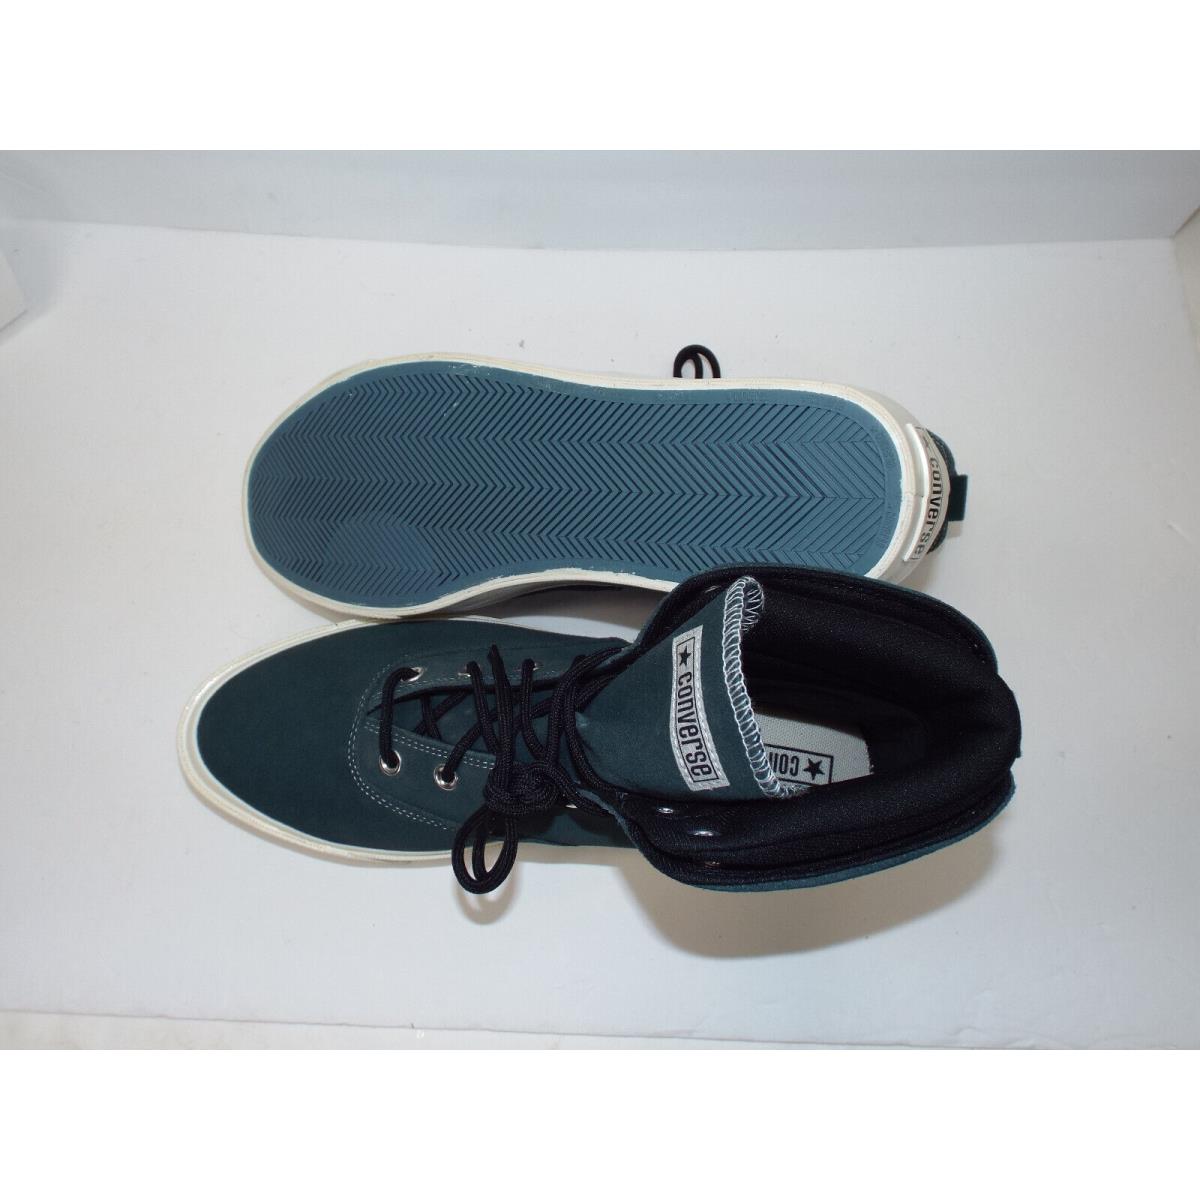 Converse shoes Skid Grip - Succulent Green 1